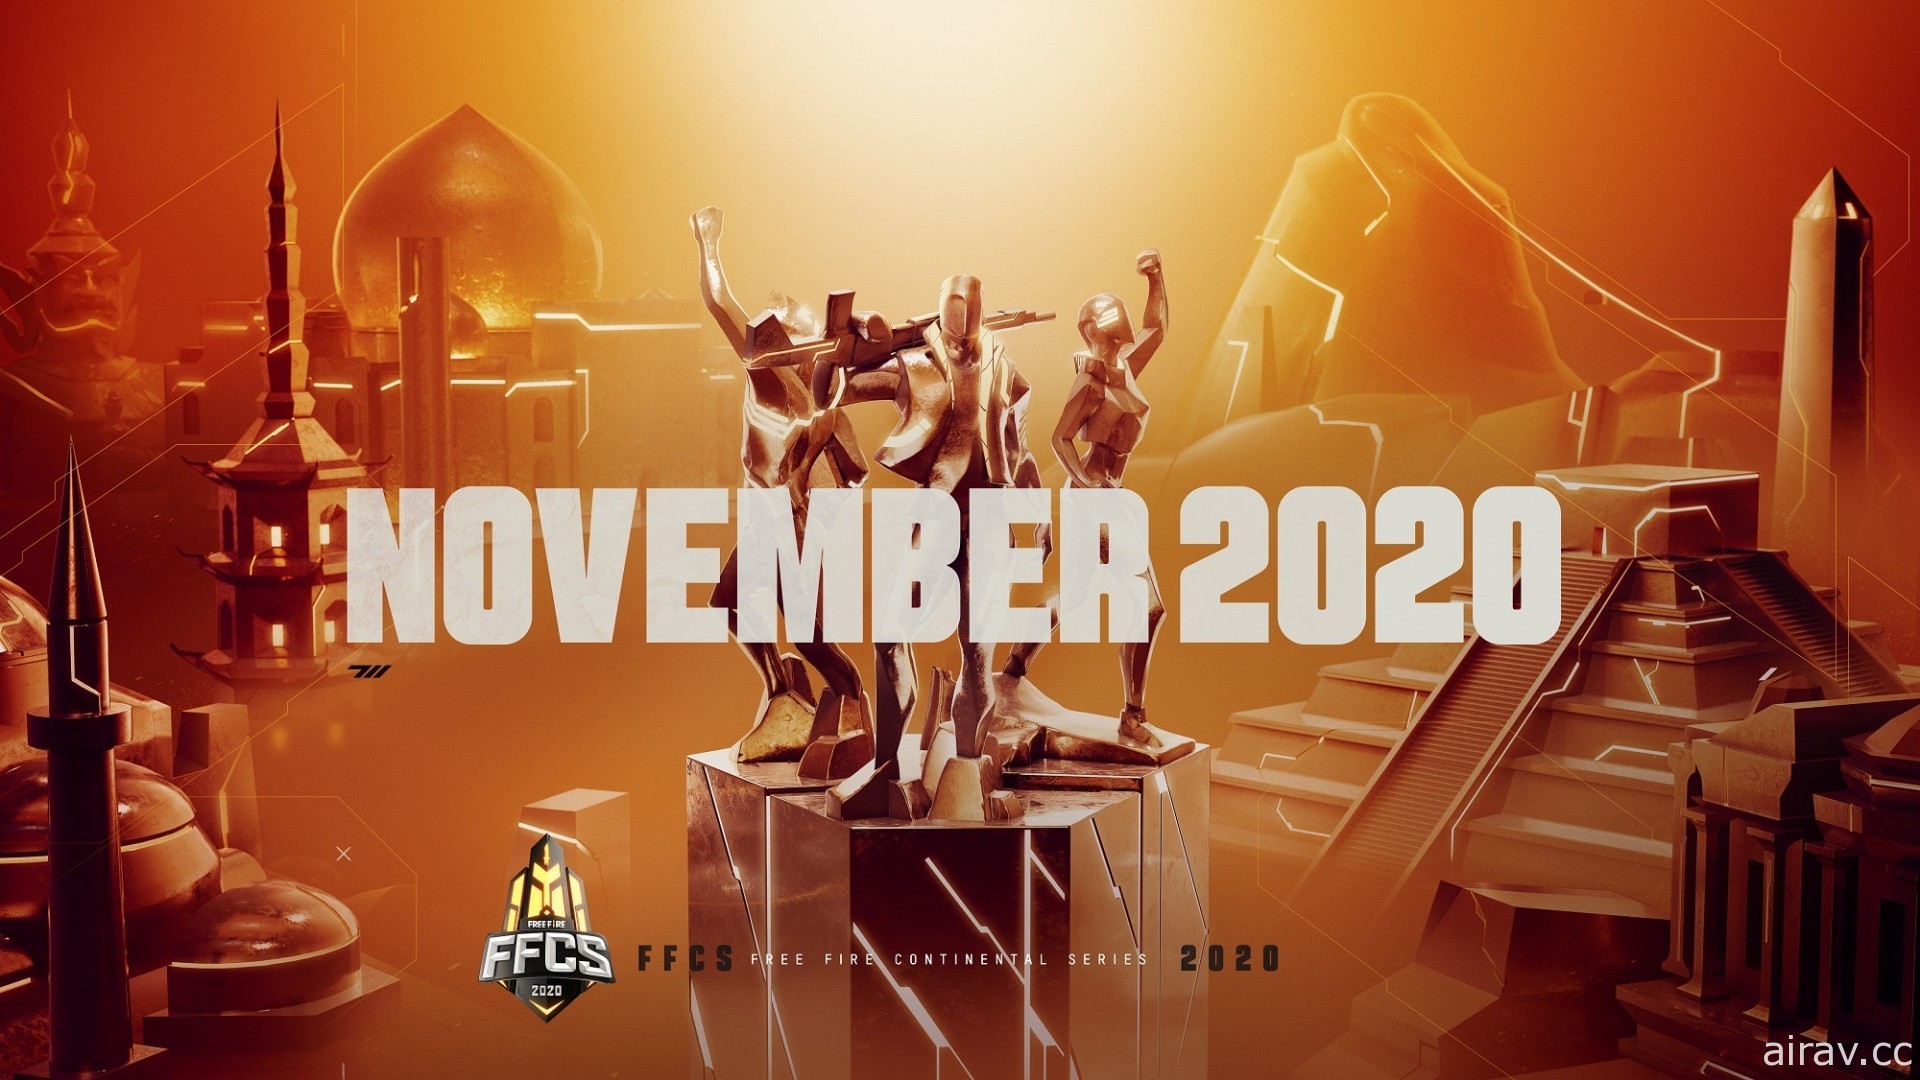 《Free Fire - 我要活下去》 2020 大型国际赛事 FFCS 赛程内容公开